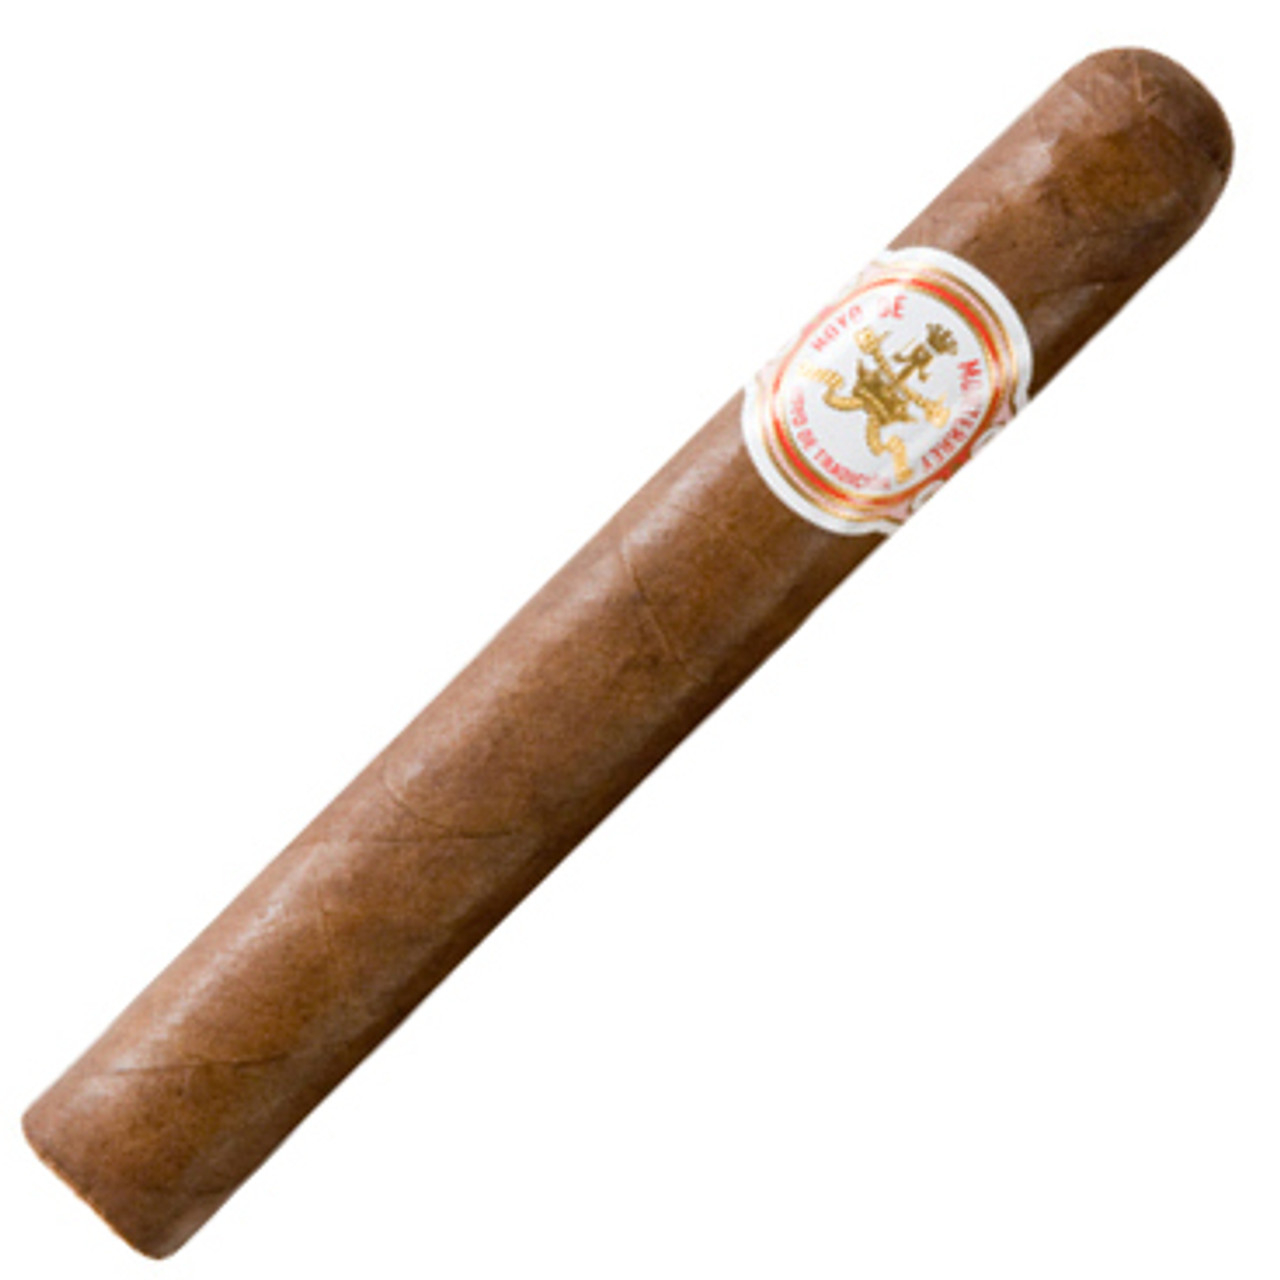 Hoyo De Monterrey Tradicion Toro Grande Cigars - 6 1/4 x 54 (Box of 25)